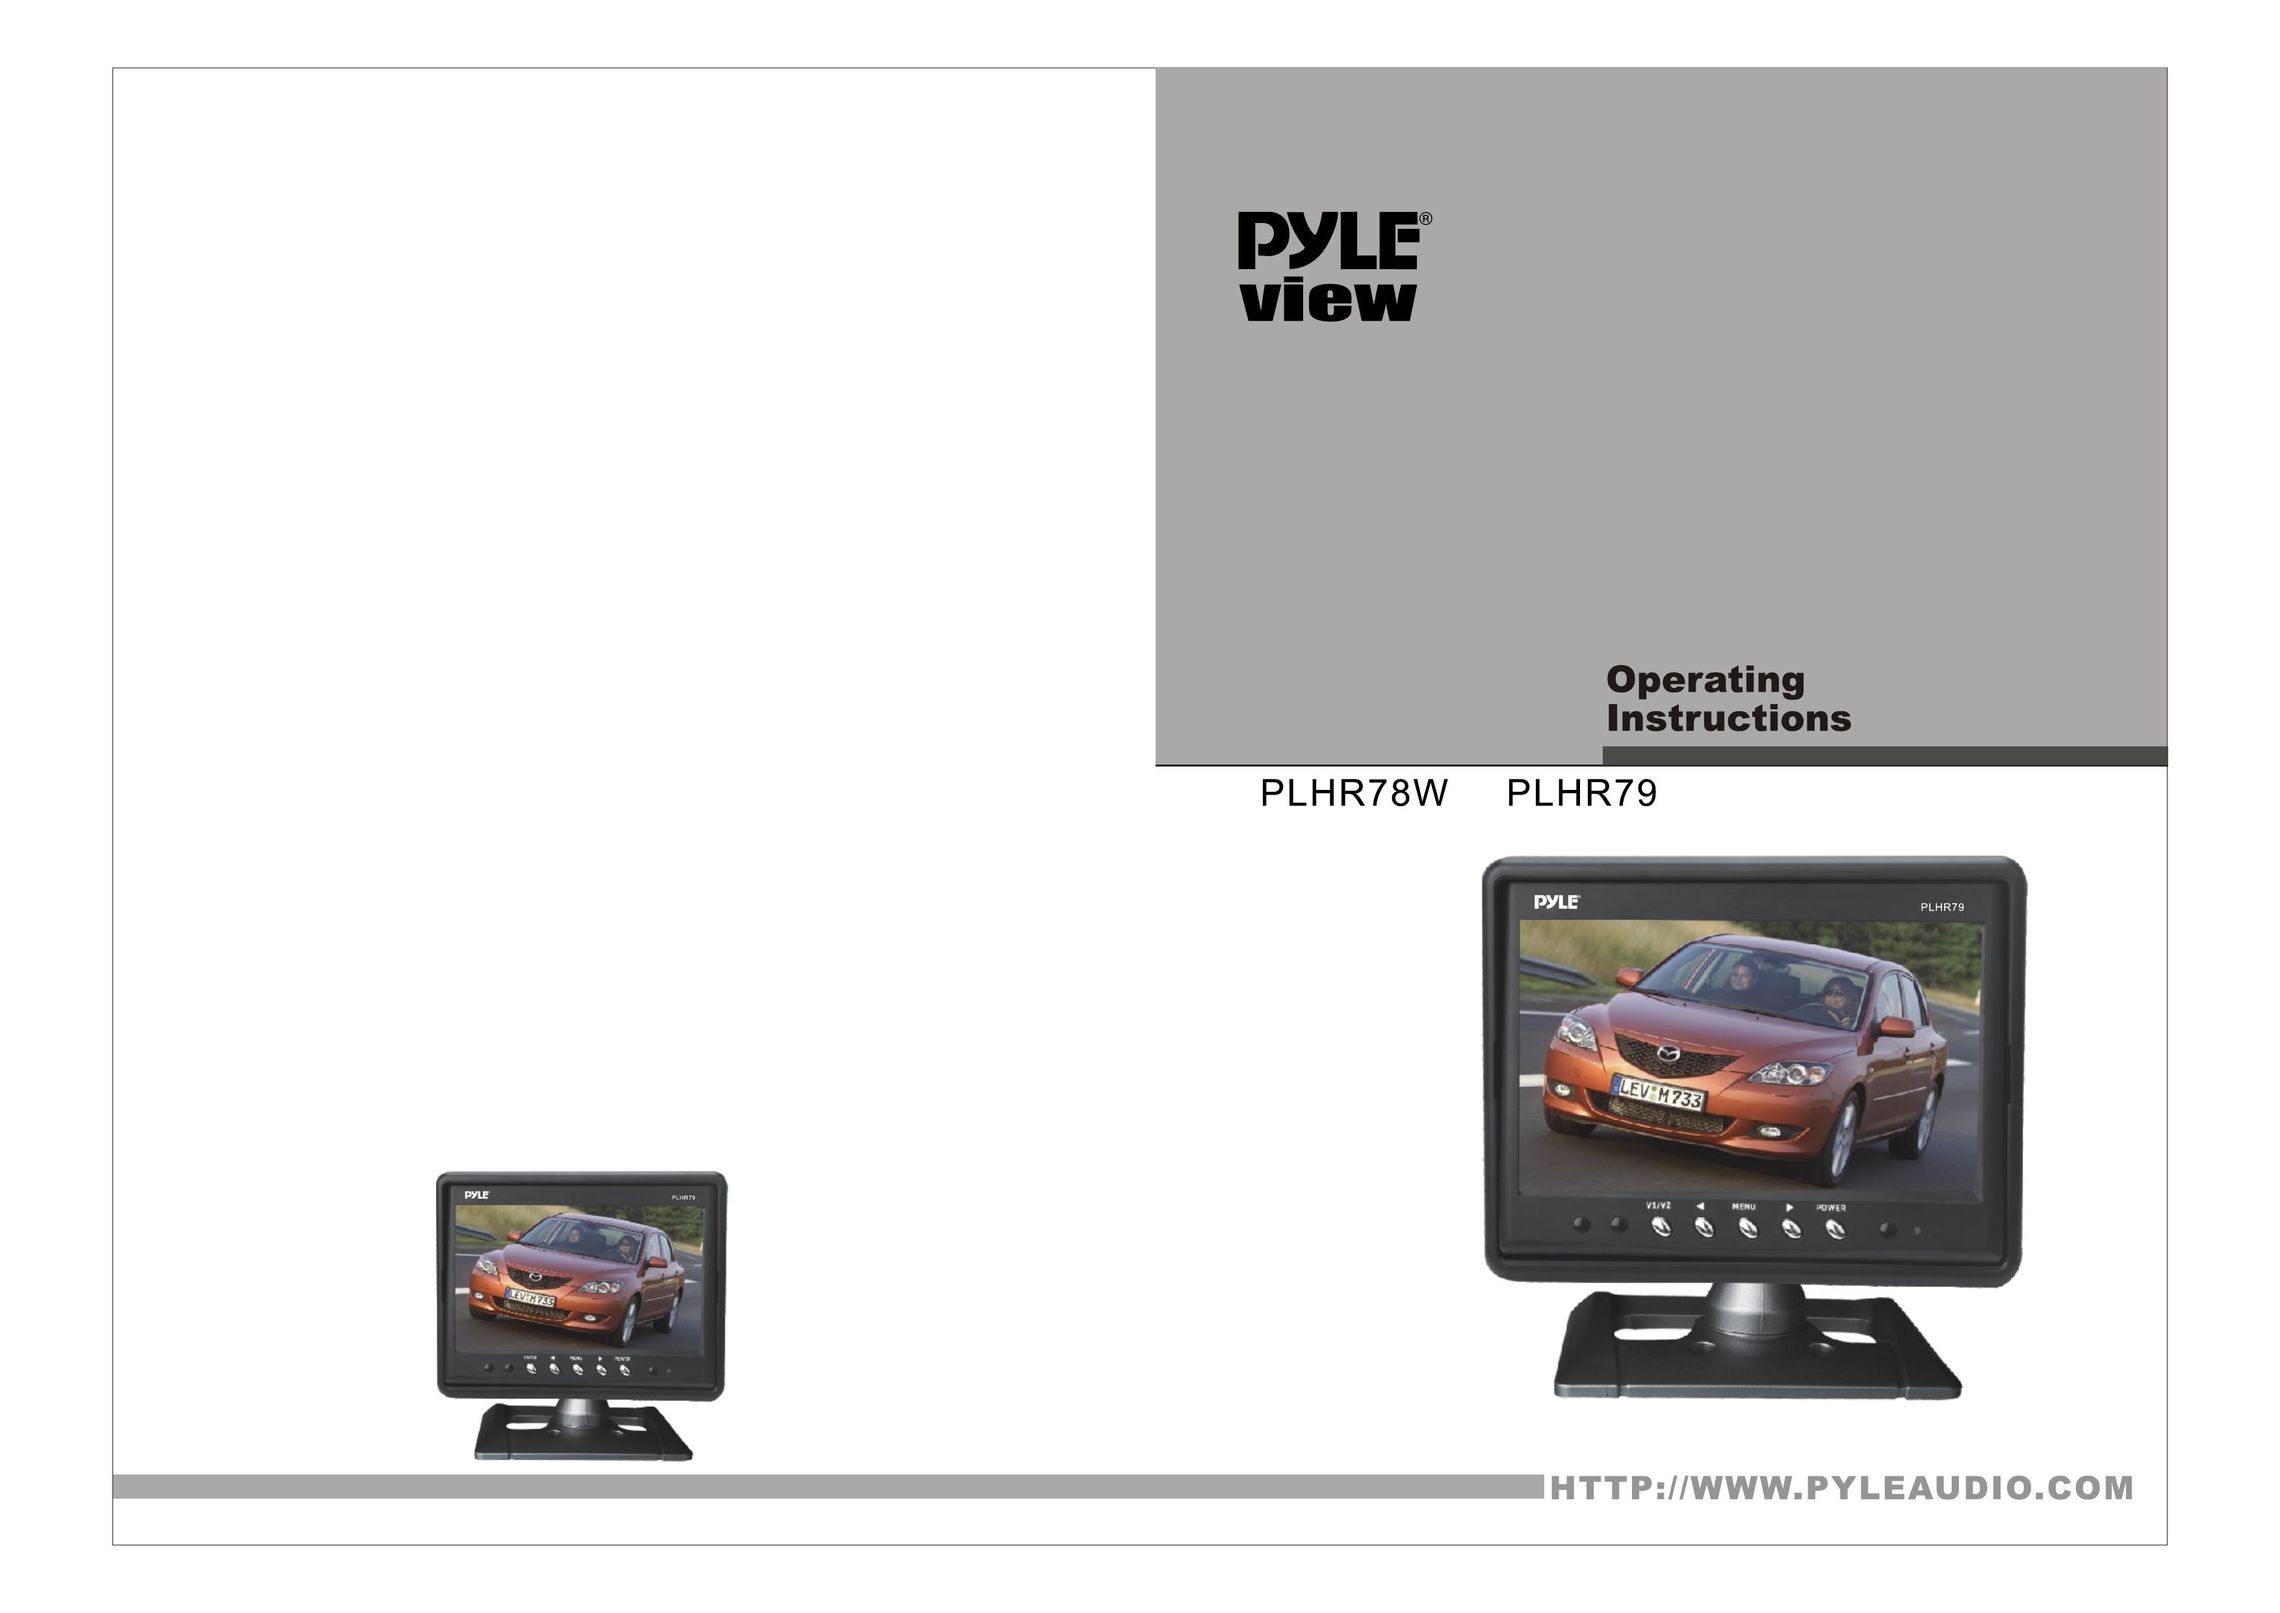 PYLE Audio PLHR79 Car Video System User Manual